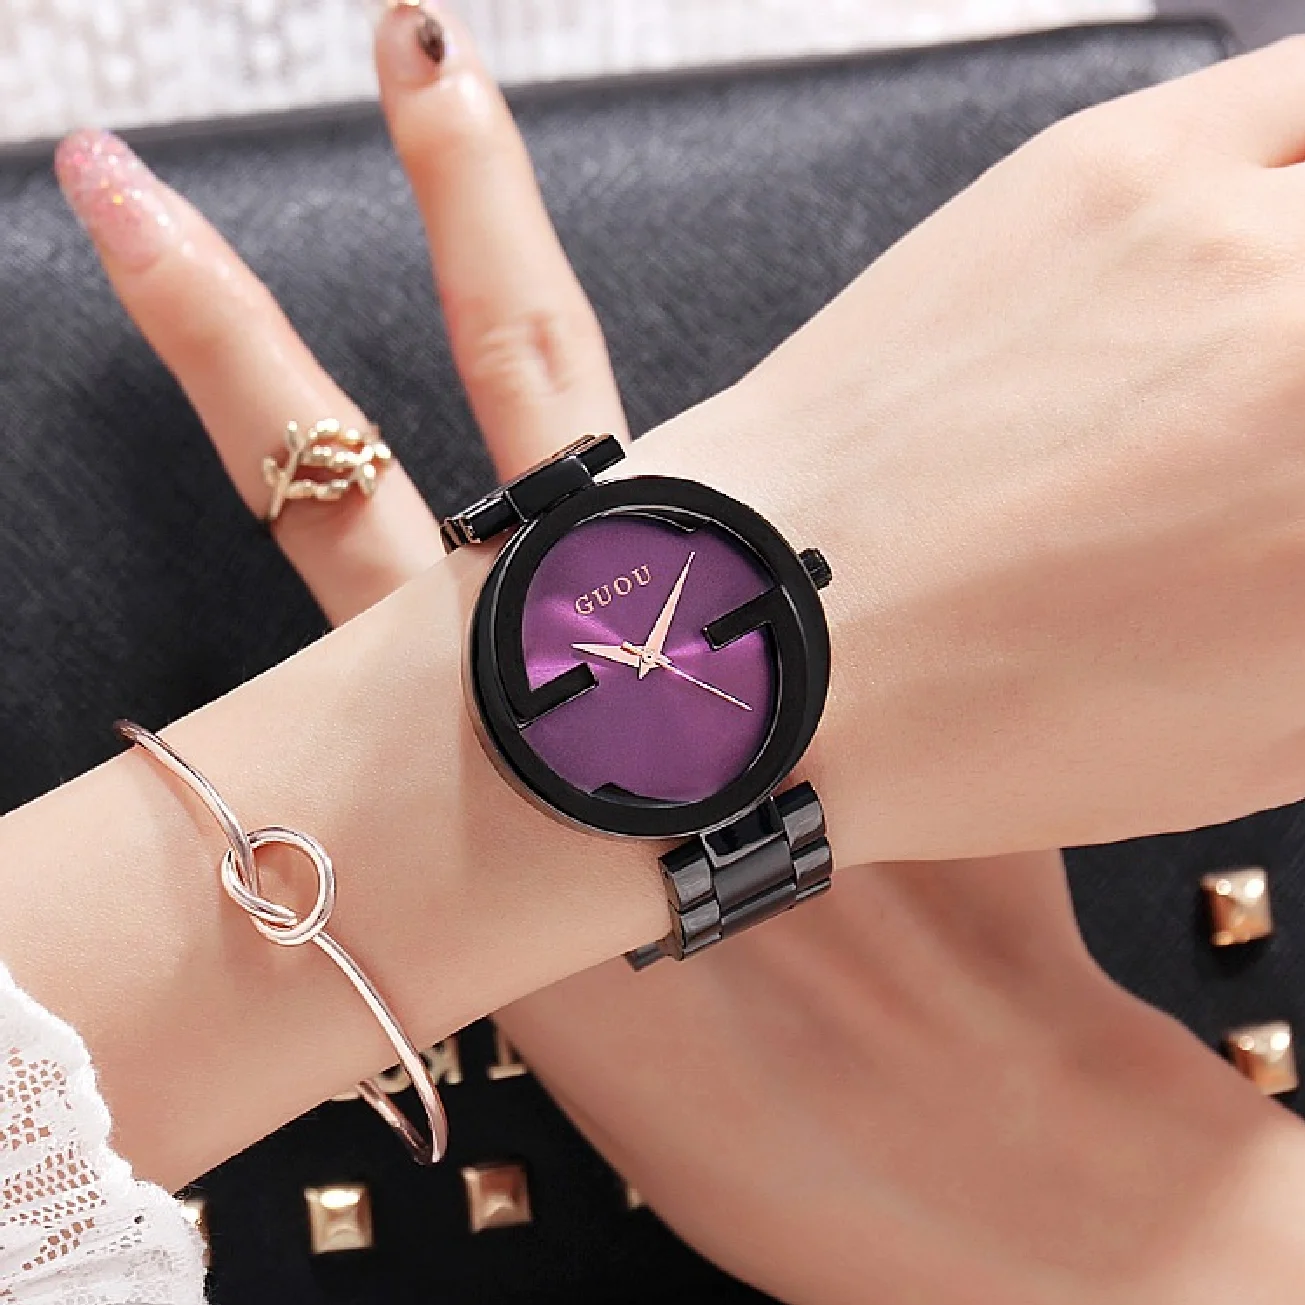 GUOU Top Brand New Fashion Unique Women Quartz Watch relogio feminino lady Luxury Wristwatch Ladies Dress Hours Clock watches